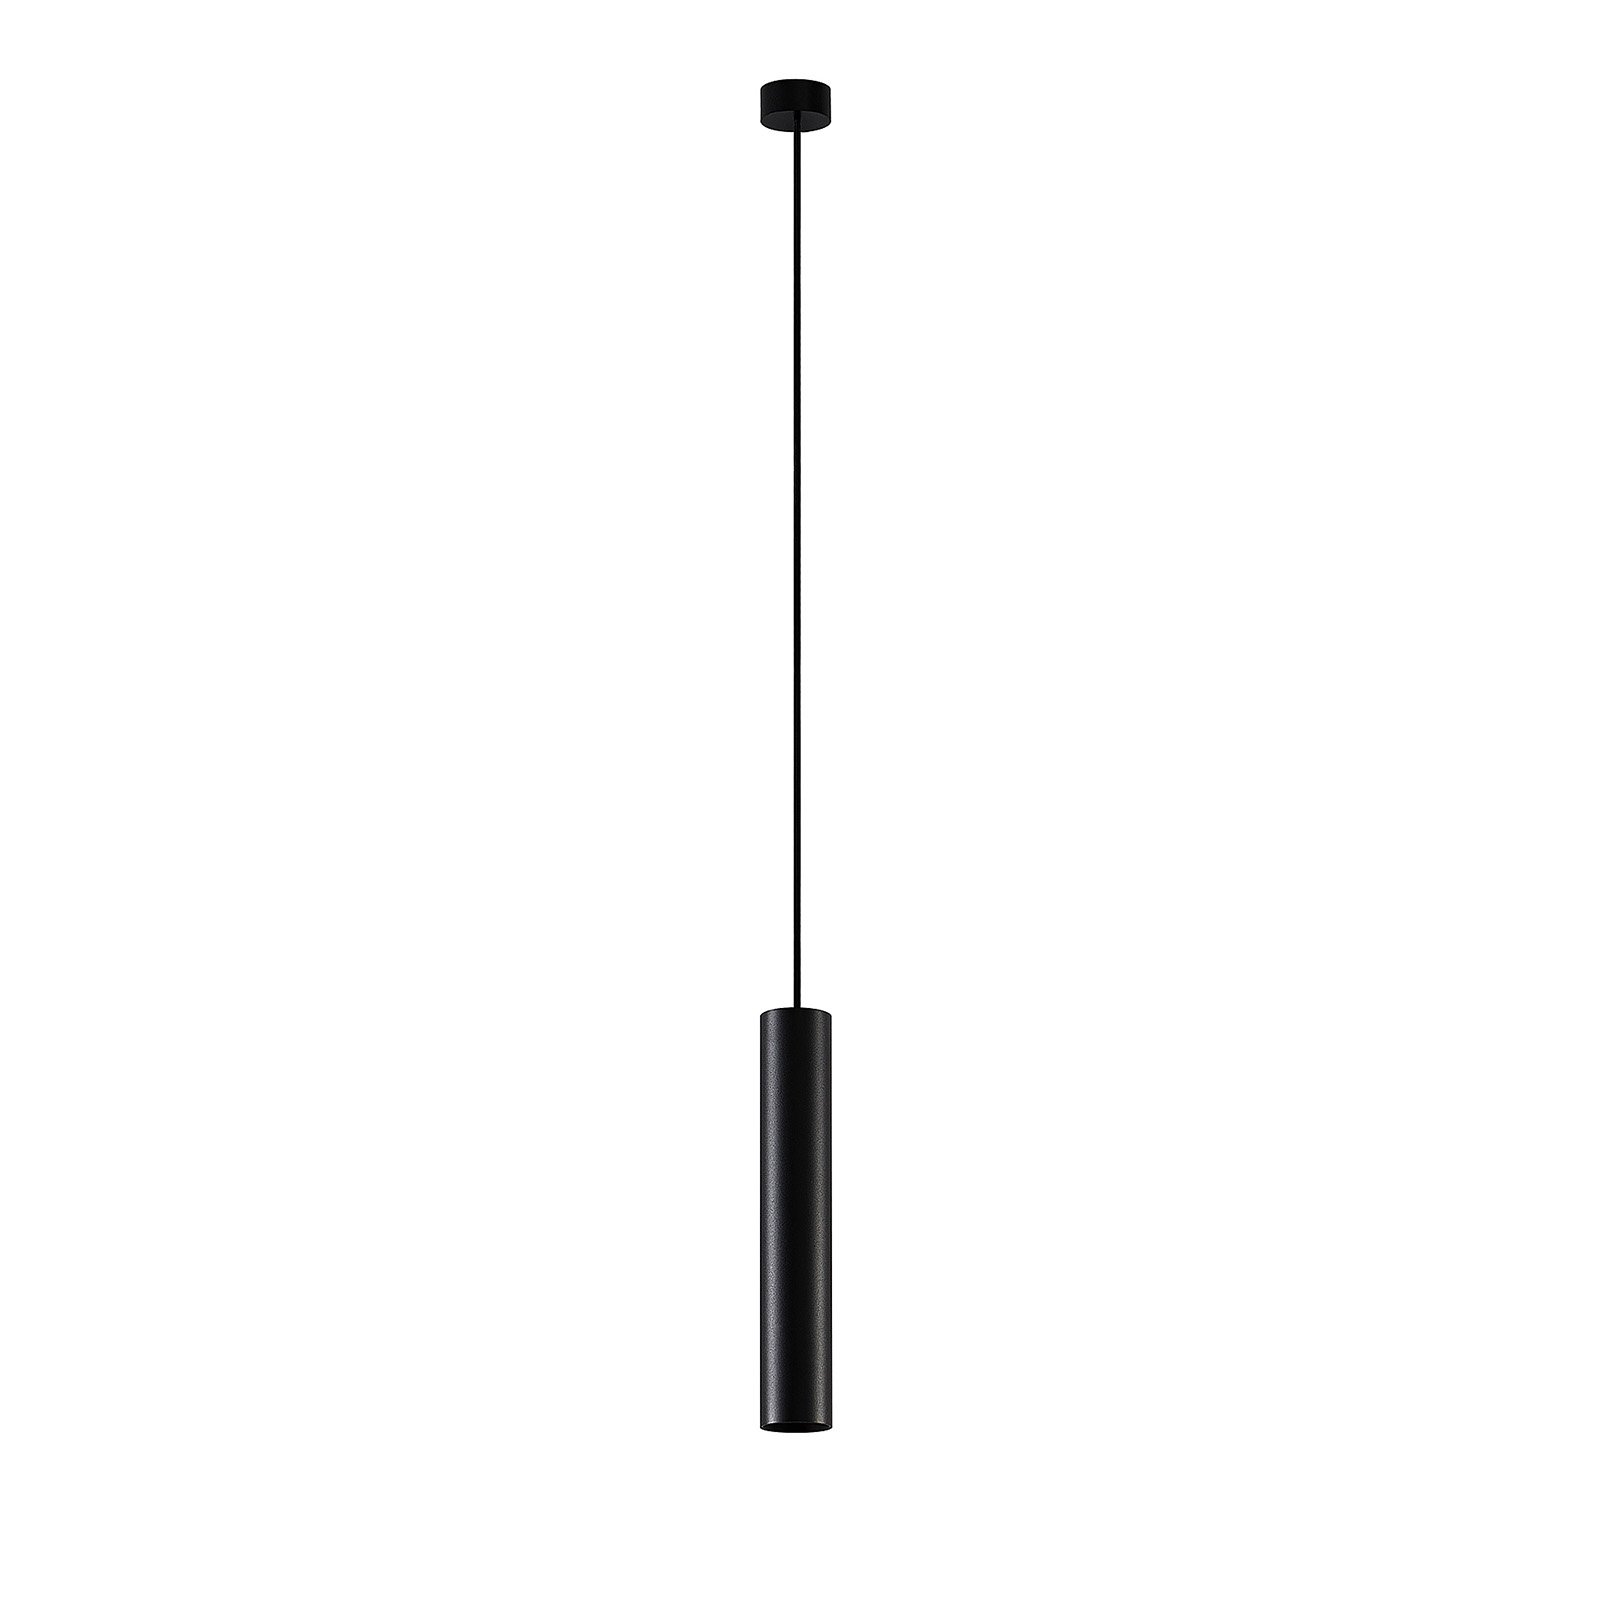 Arcchio Ejona hanglamp, hoogte 35 cm, zwart